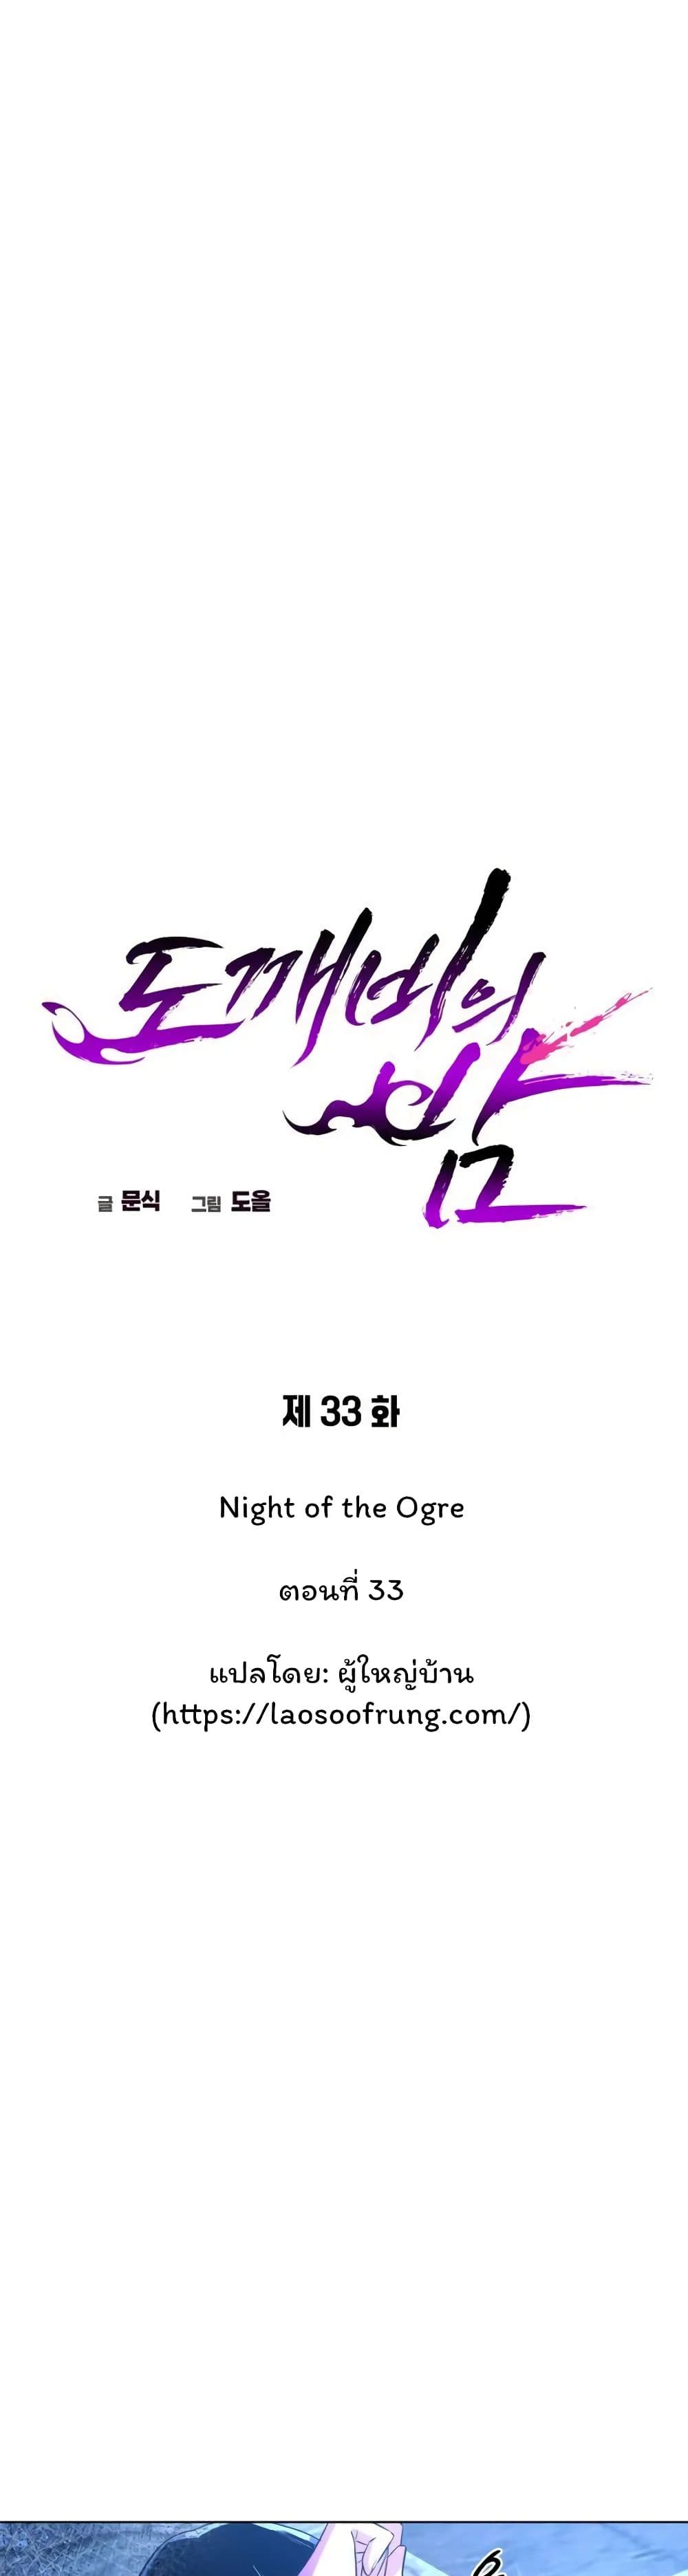 Night of the Ogre 33-33